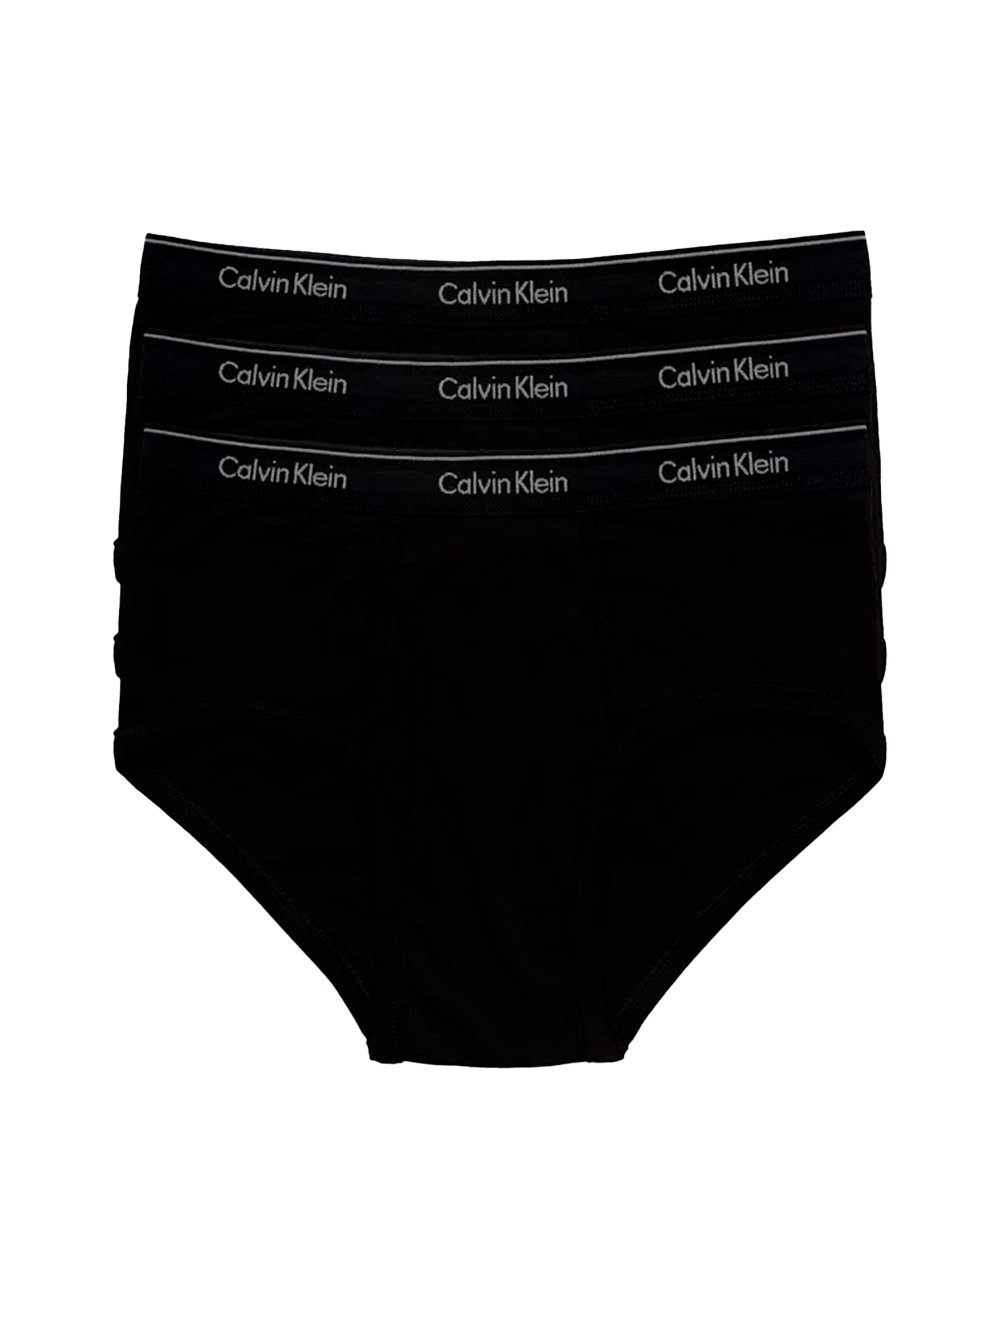 Cueca Calvin Klein Brief Cotton Stretch Classic All Black Pretas